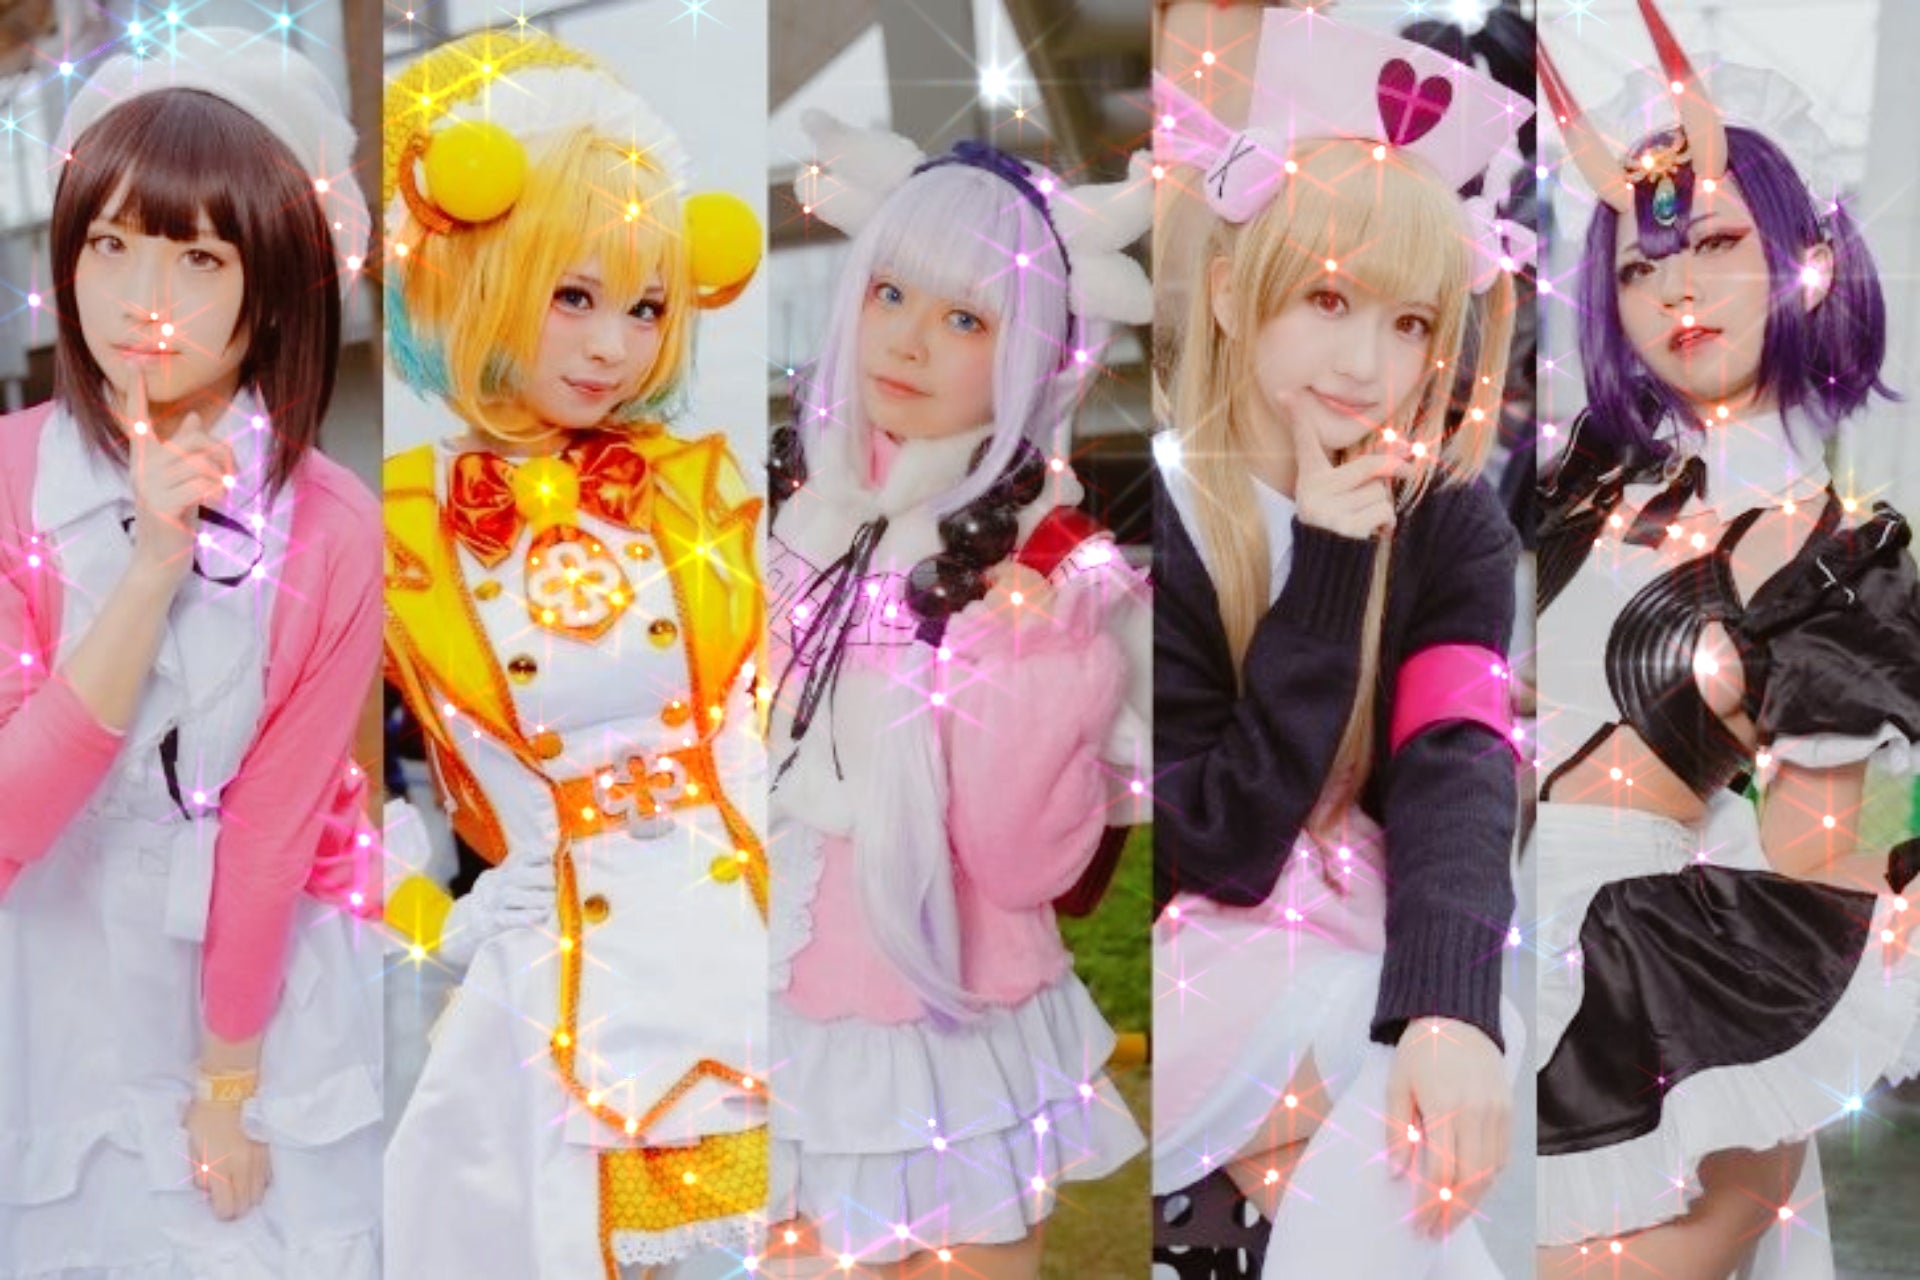 Genshin Impact Kaedehara Kazuha Cosplay Costume Anime Men Dress Outfit  Halloween | eBay